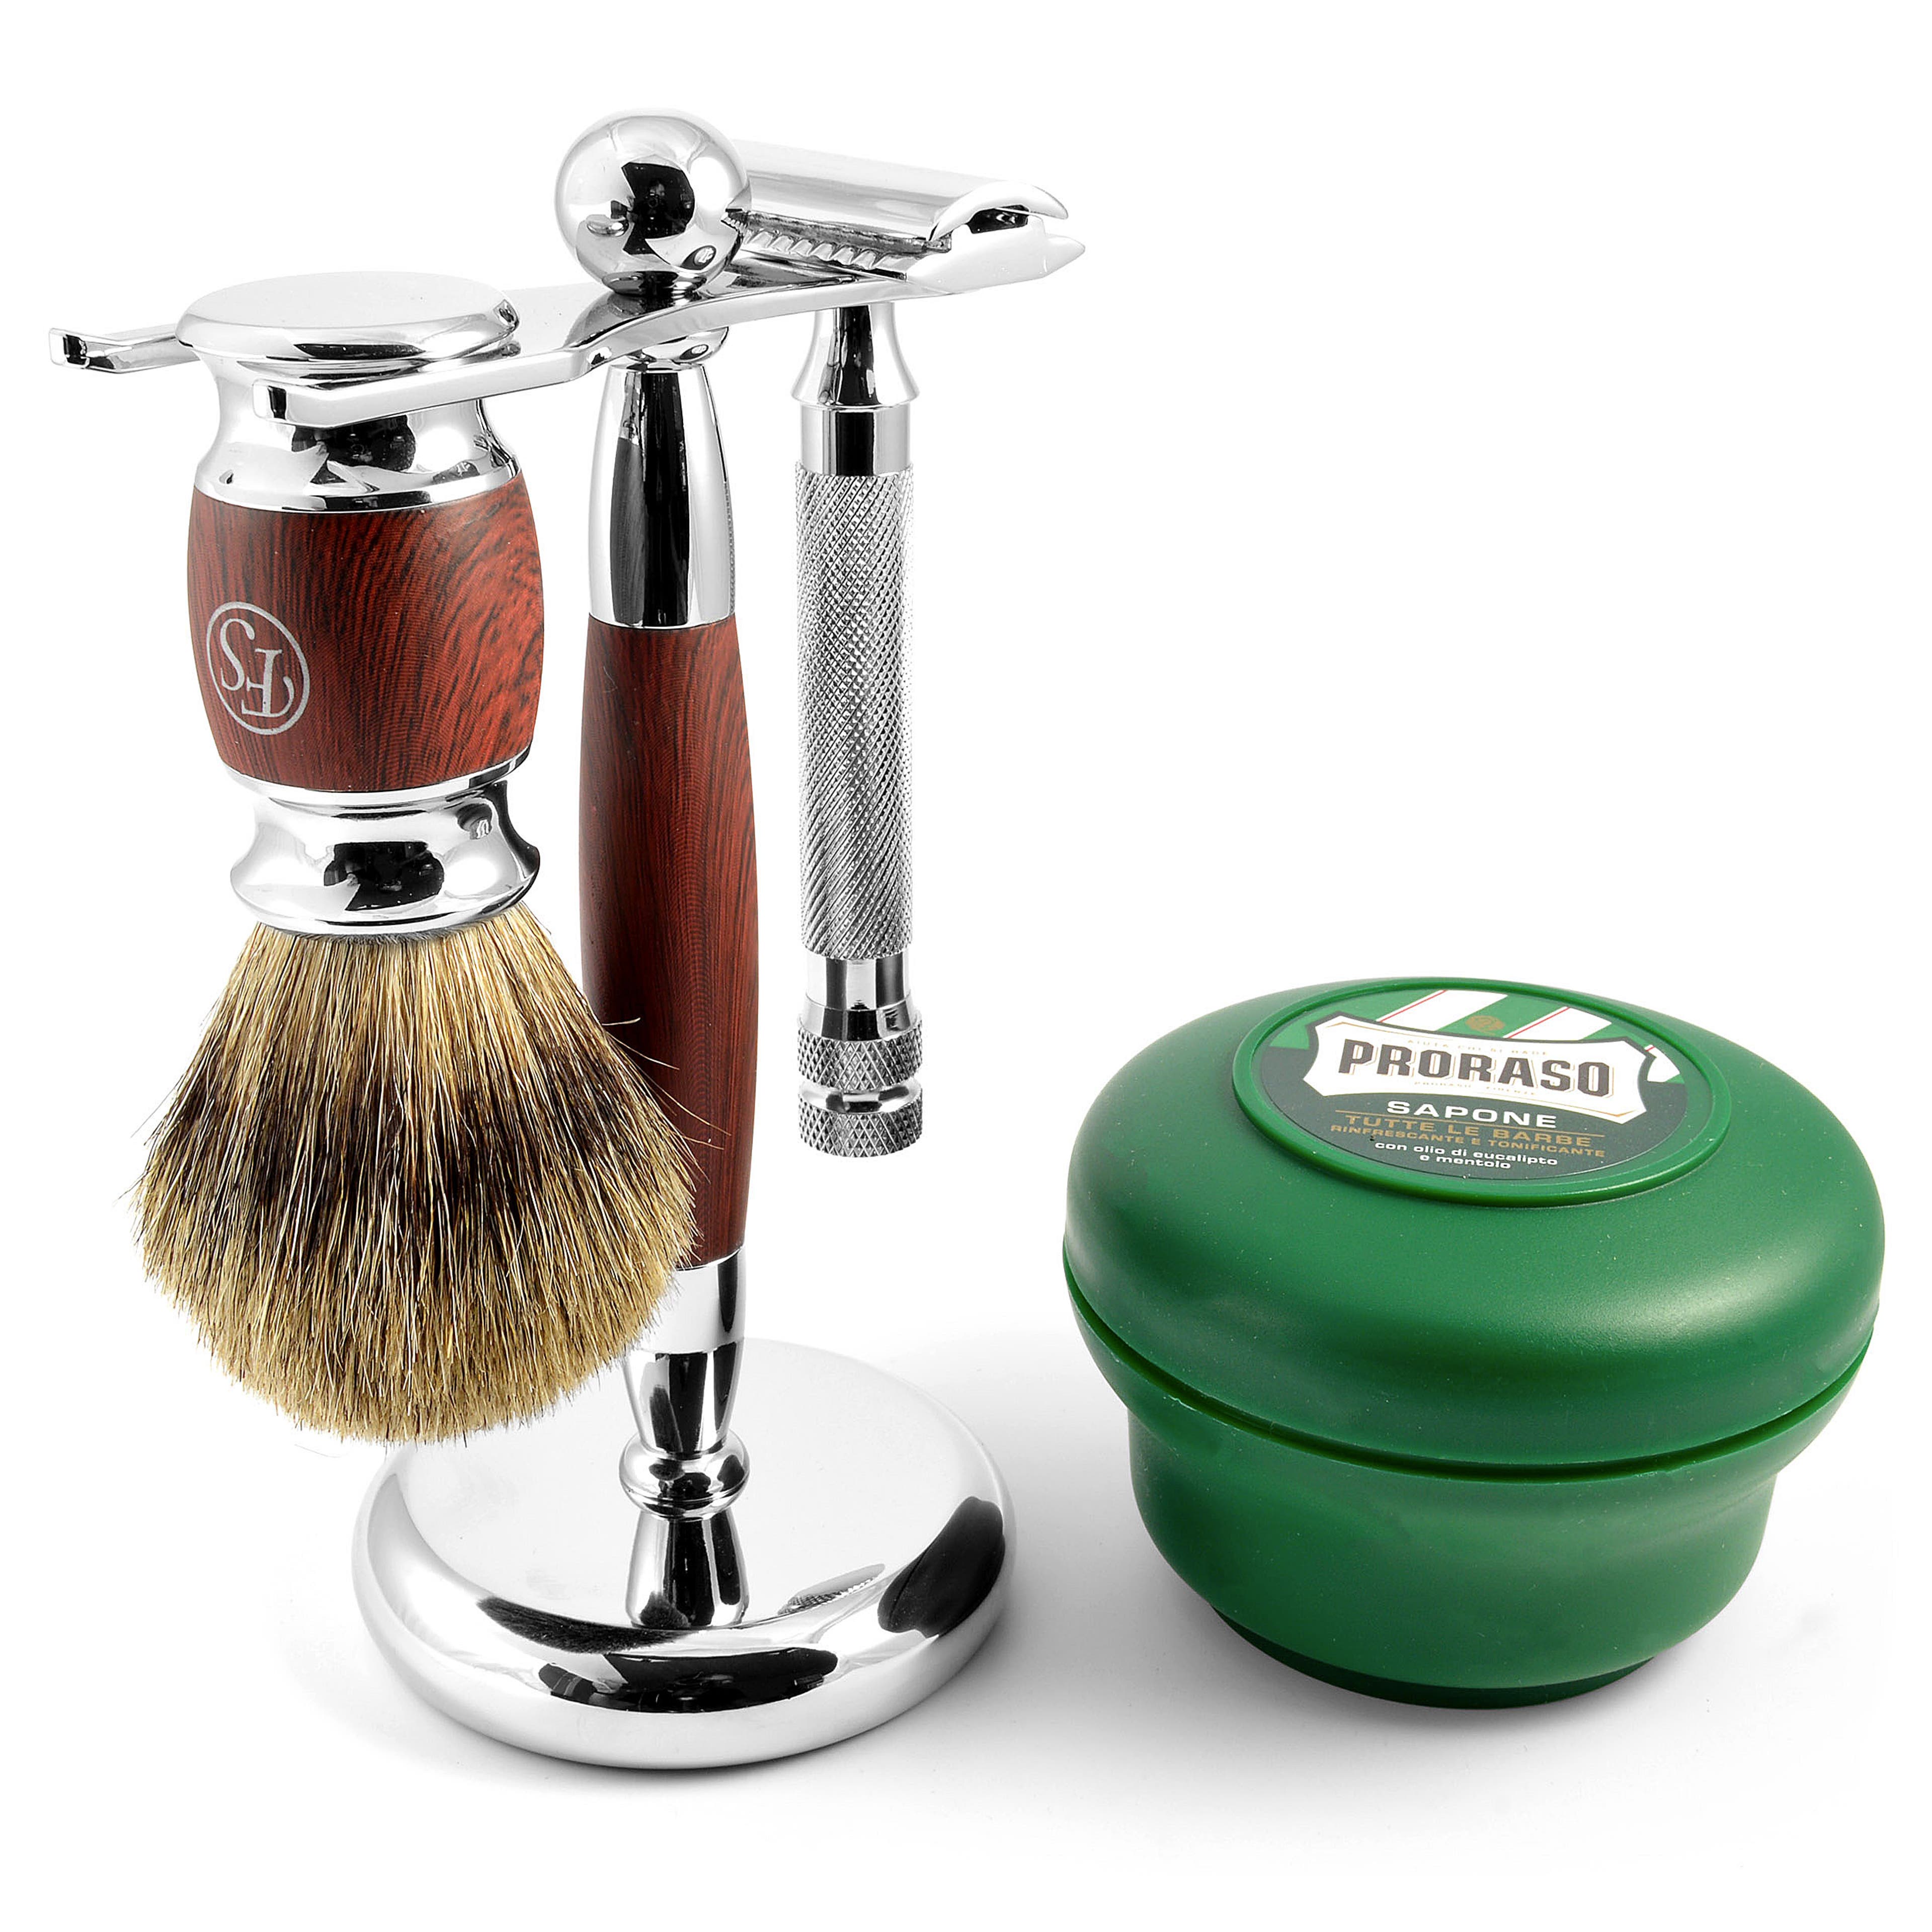 Complete Rosewood-Look Shaving Kit